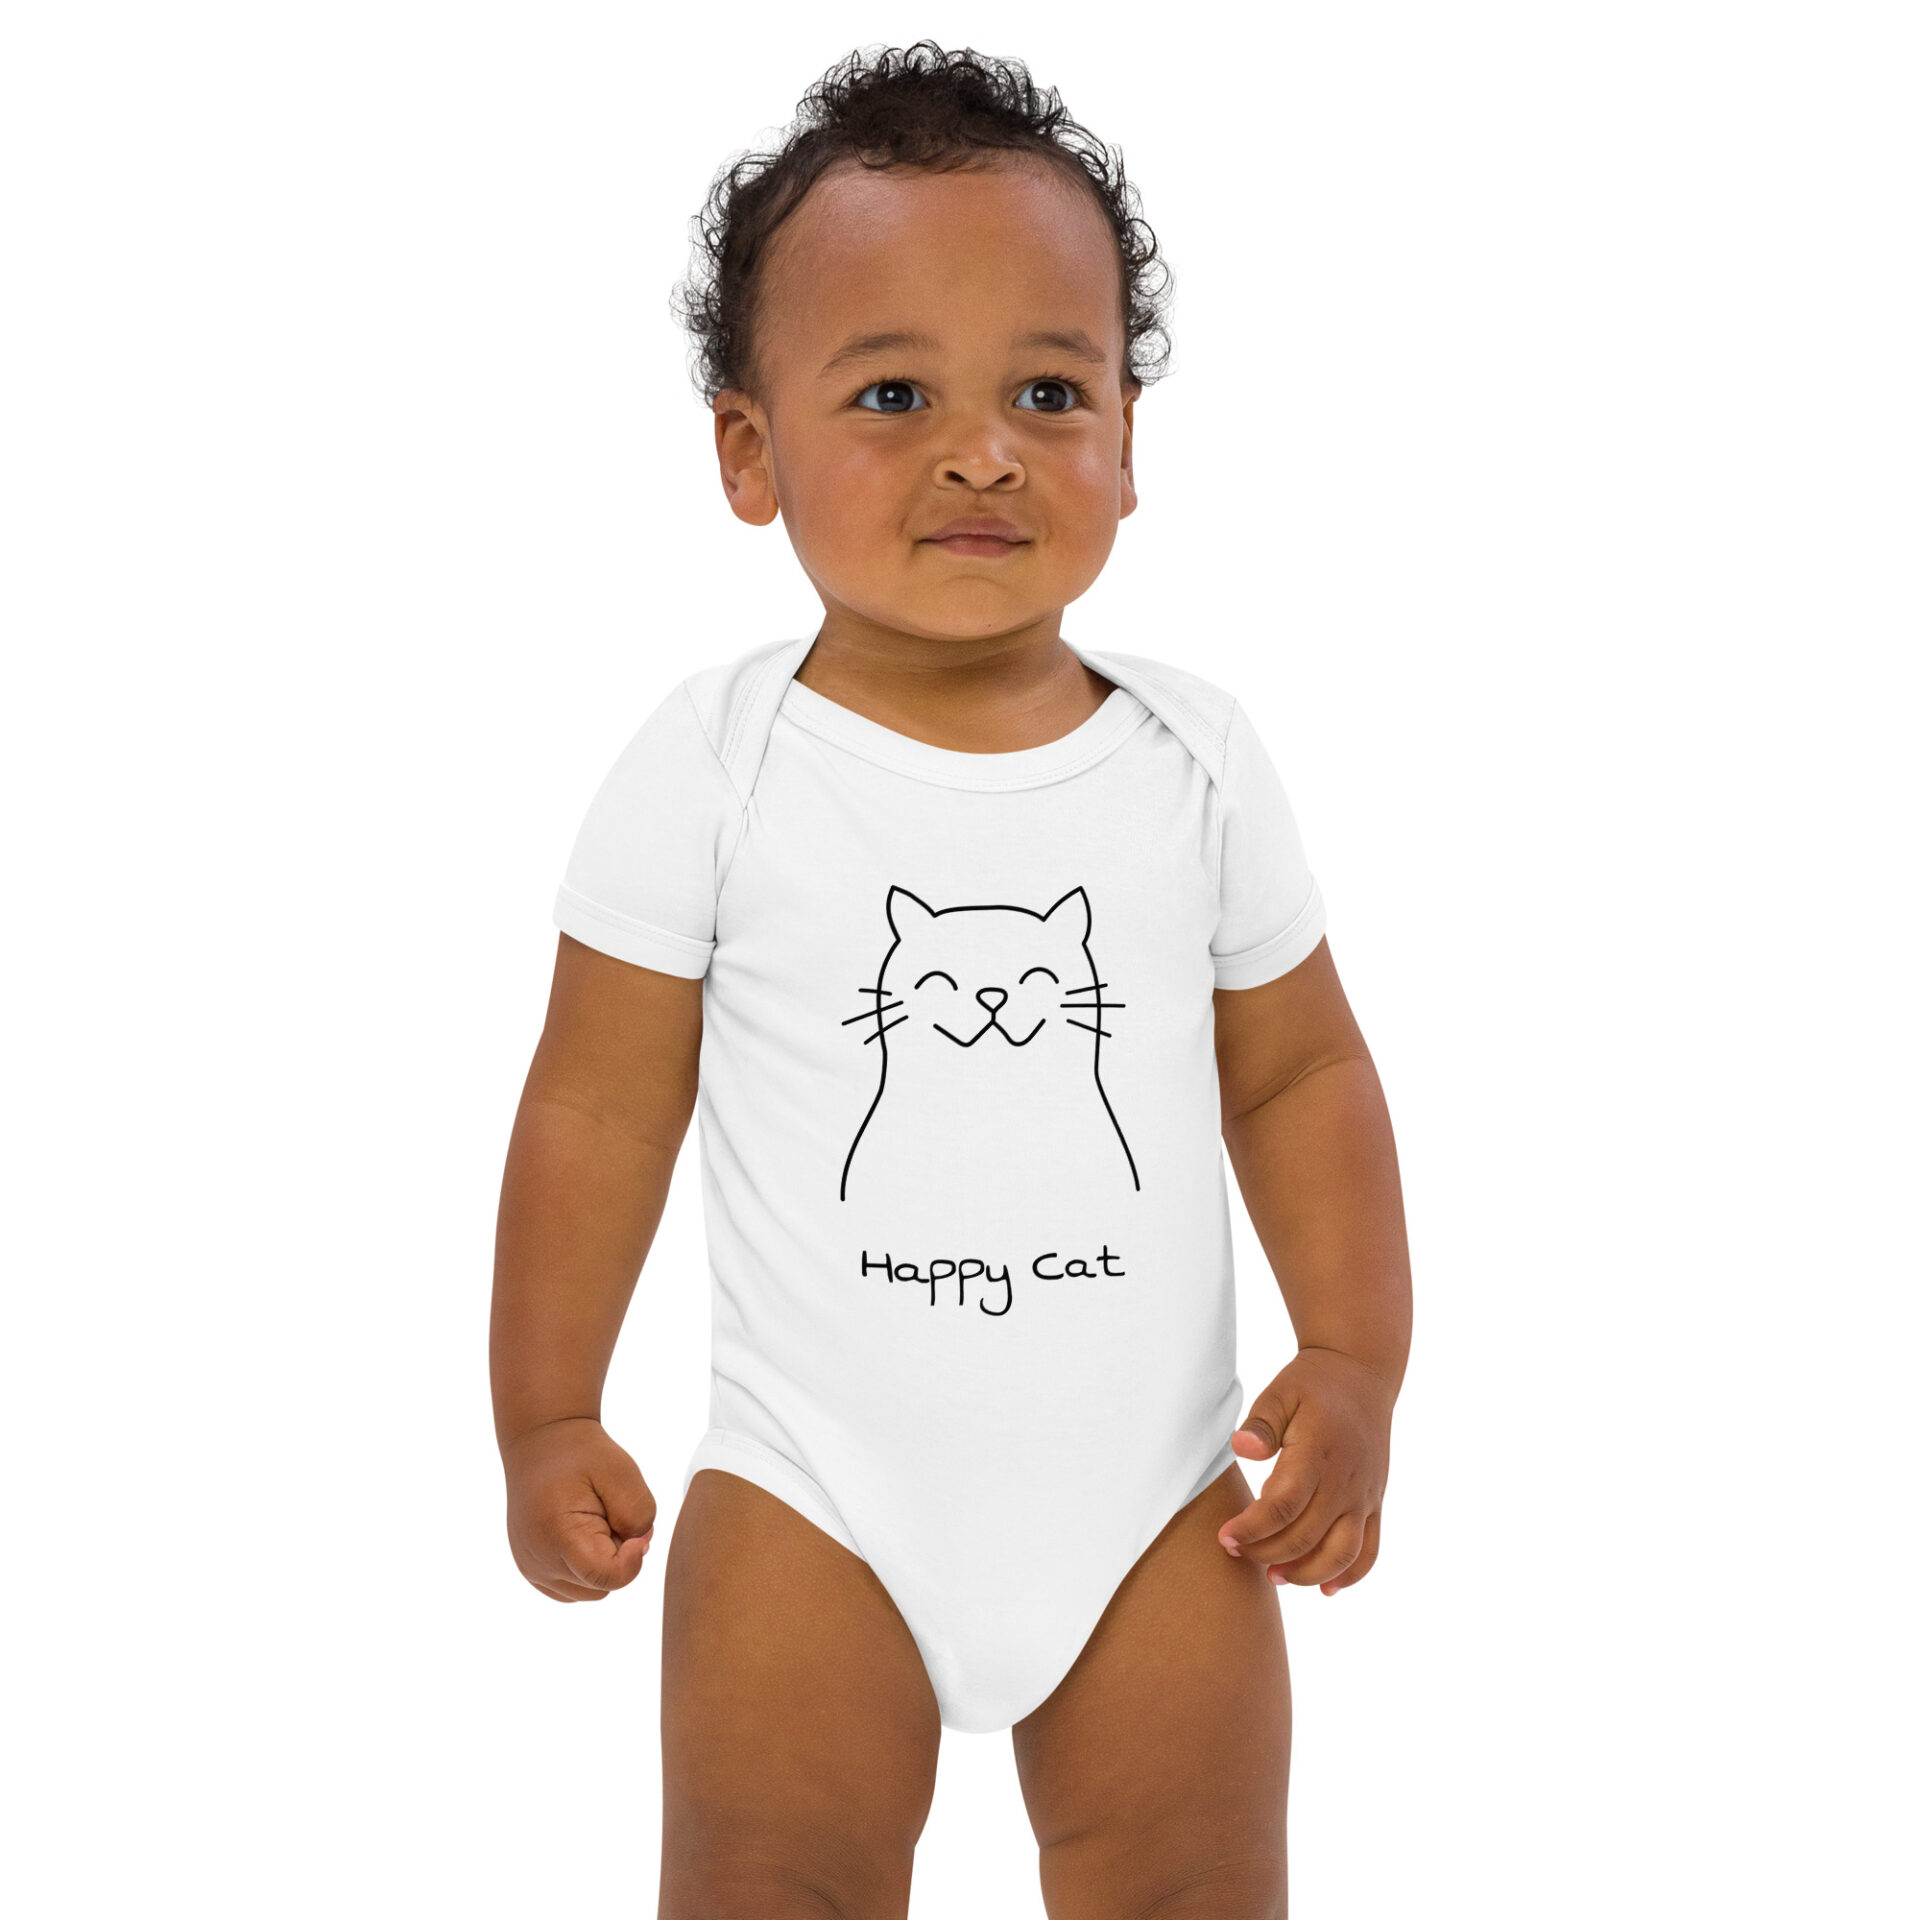 Organic cotton baby bodysuit, “Happy Cat”